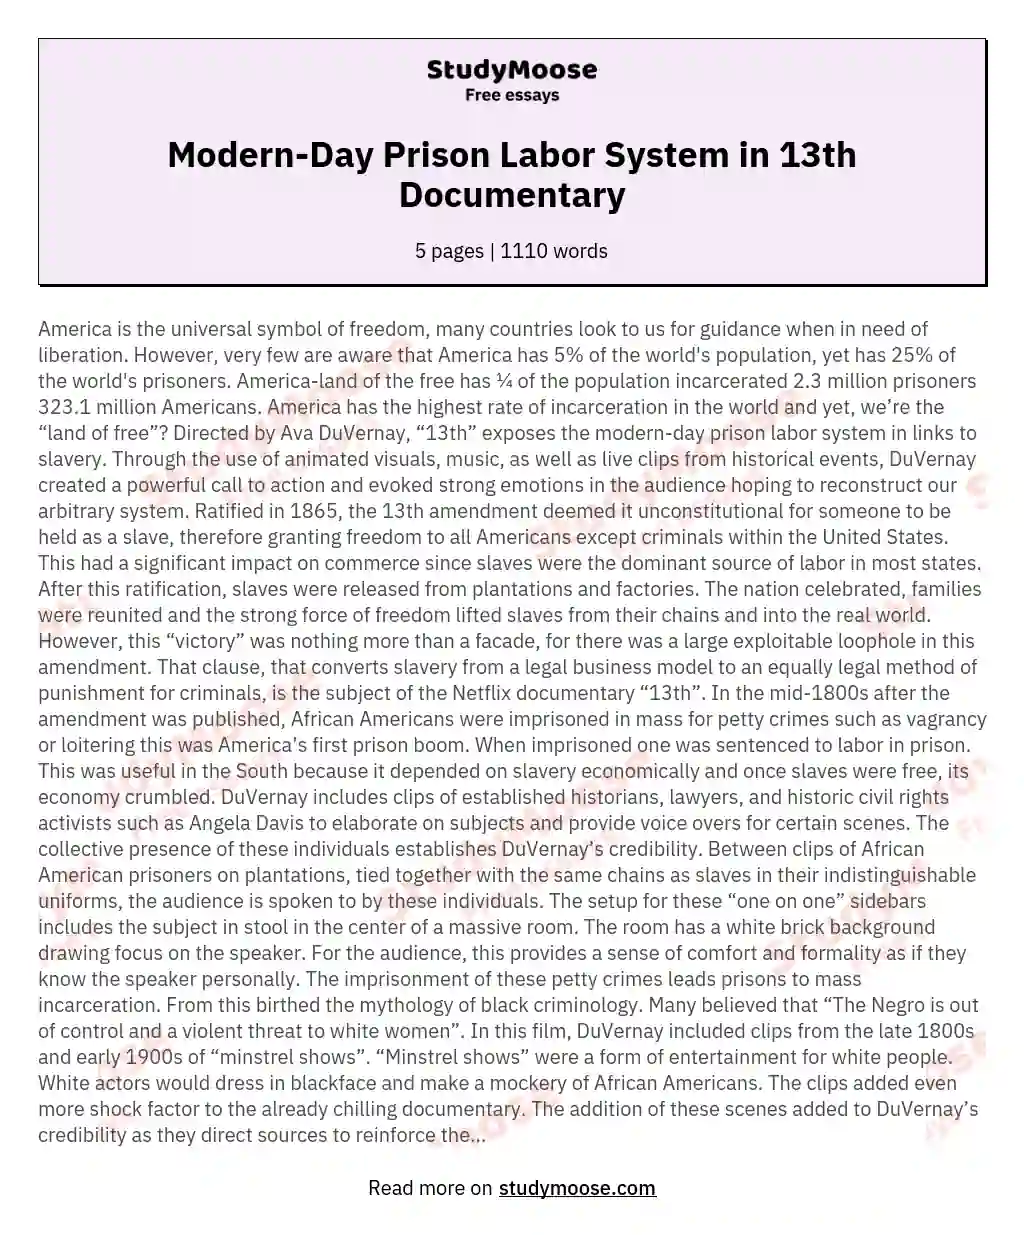 Modern-Day Prison Labor System in 13th Documentary essay